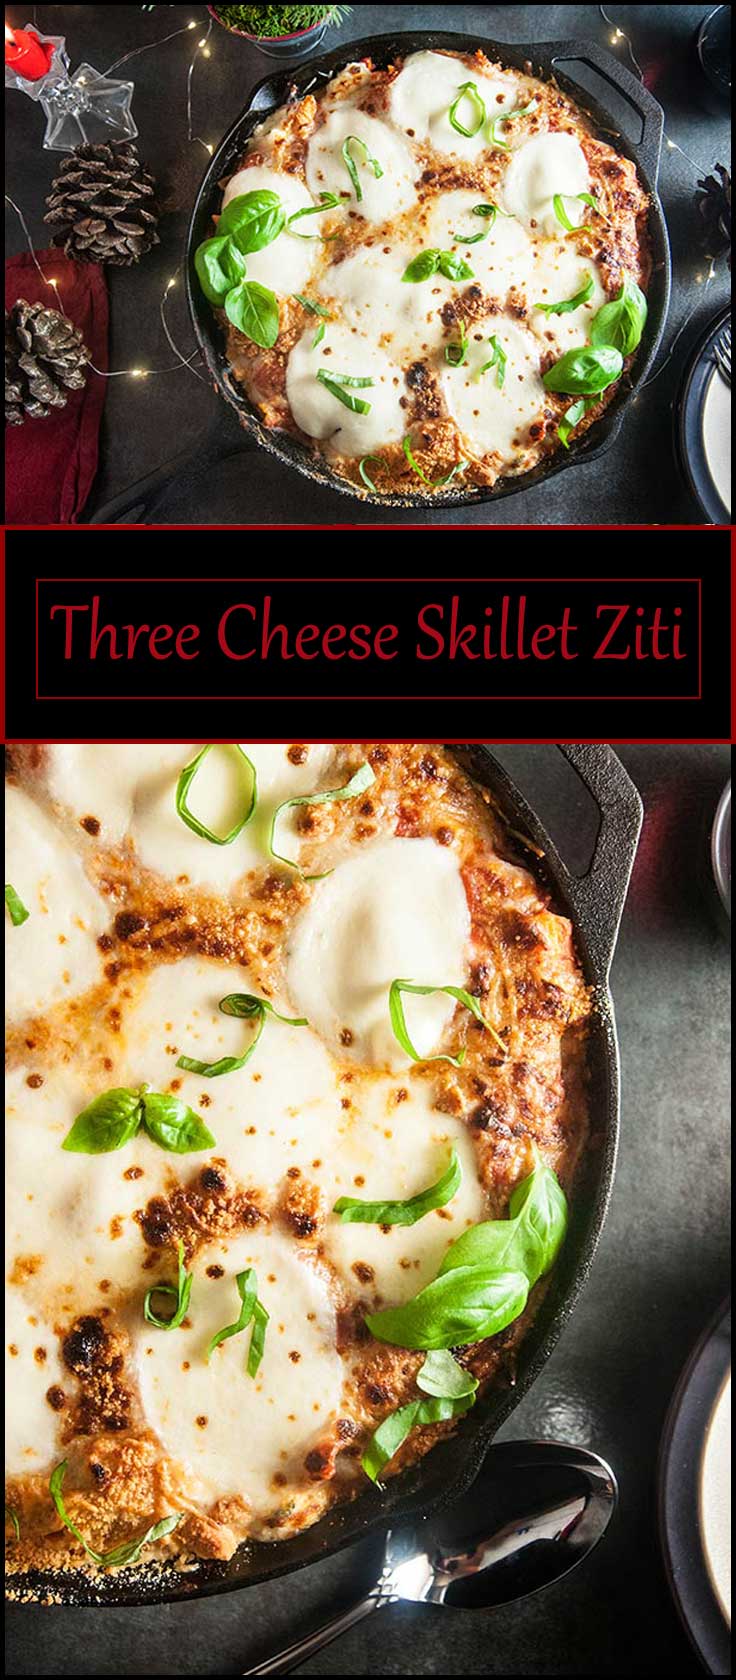 Three Cheese Skillet Ziti from www.seasonedsprinkles.com